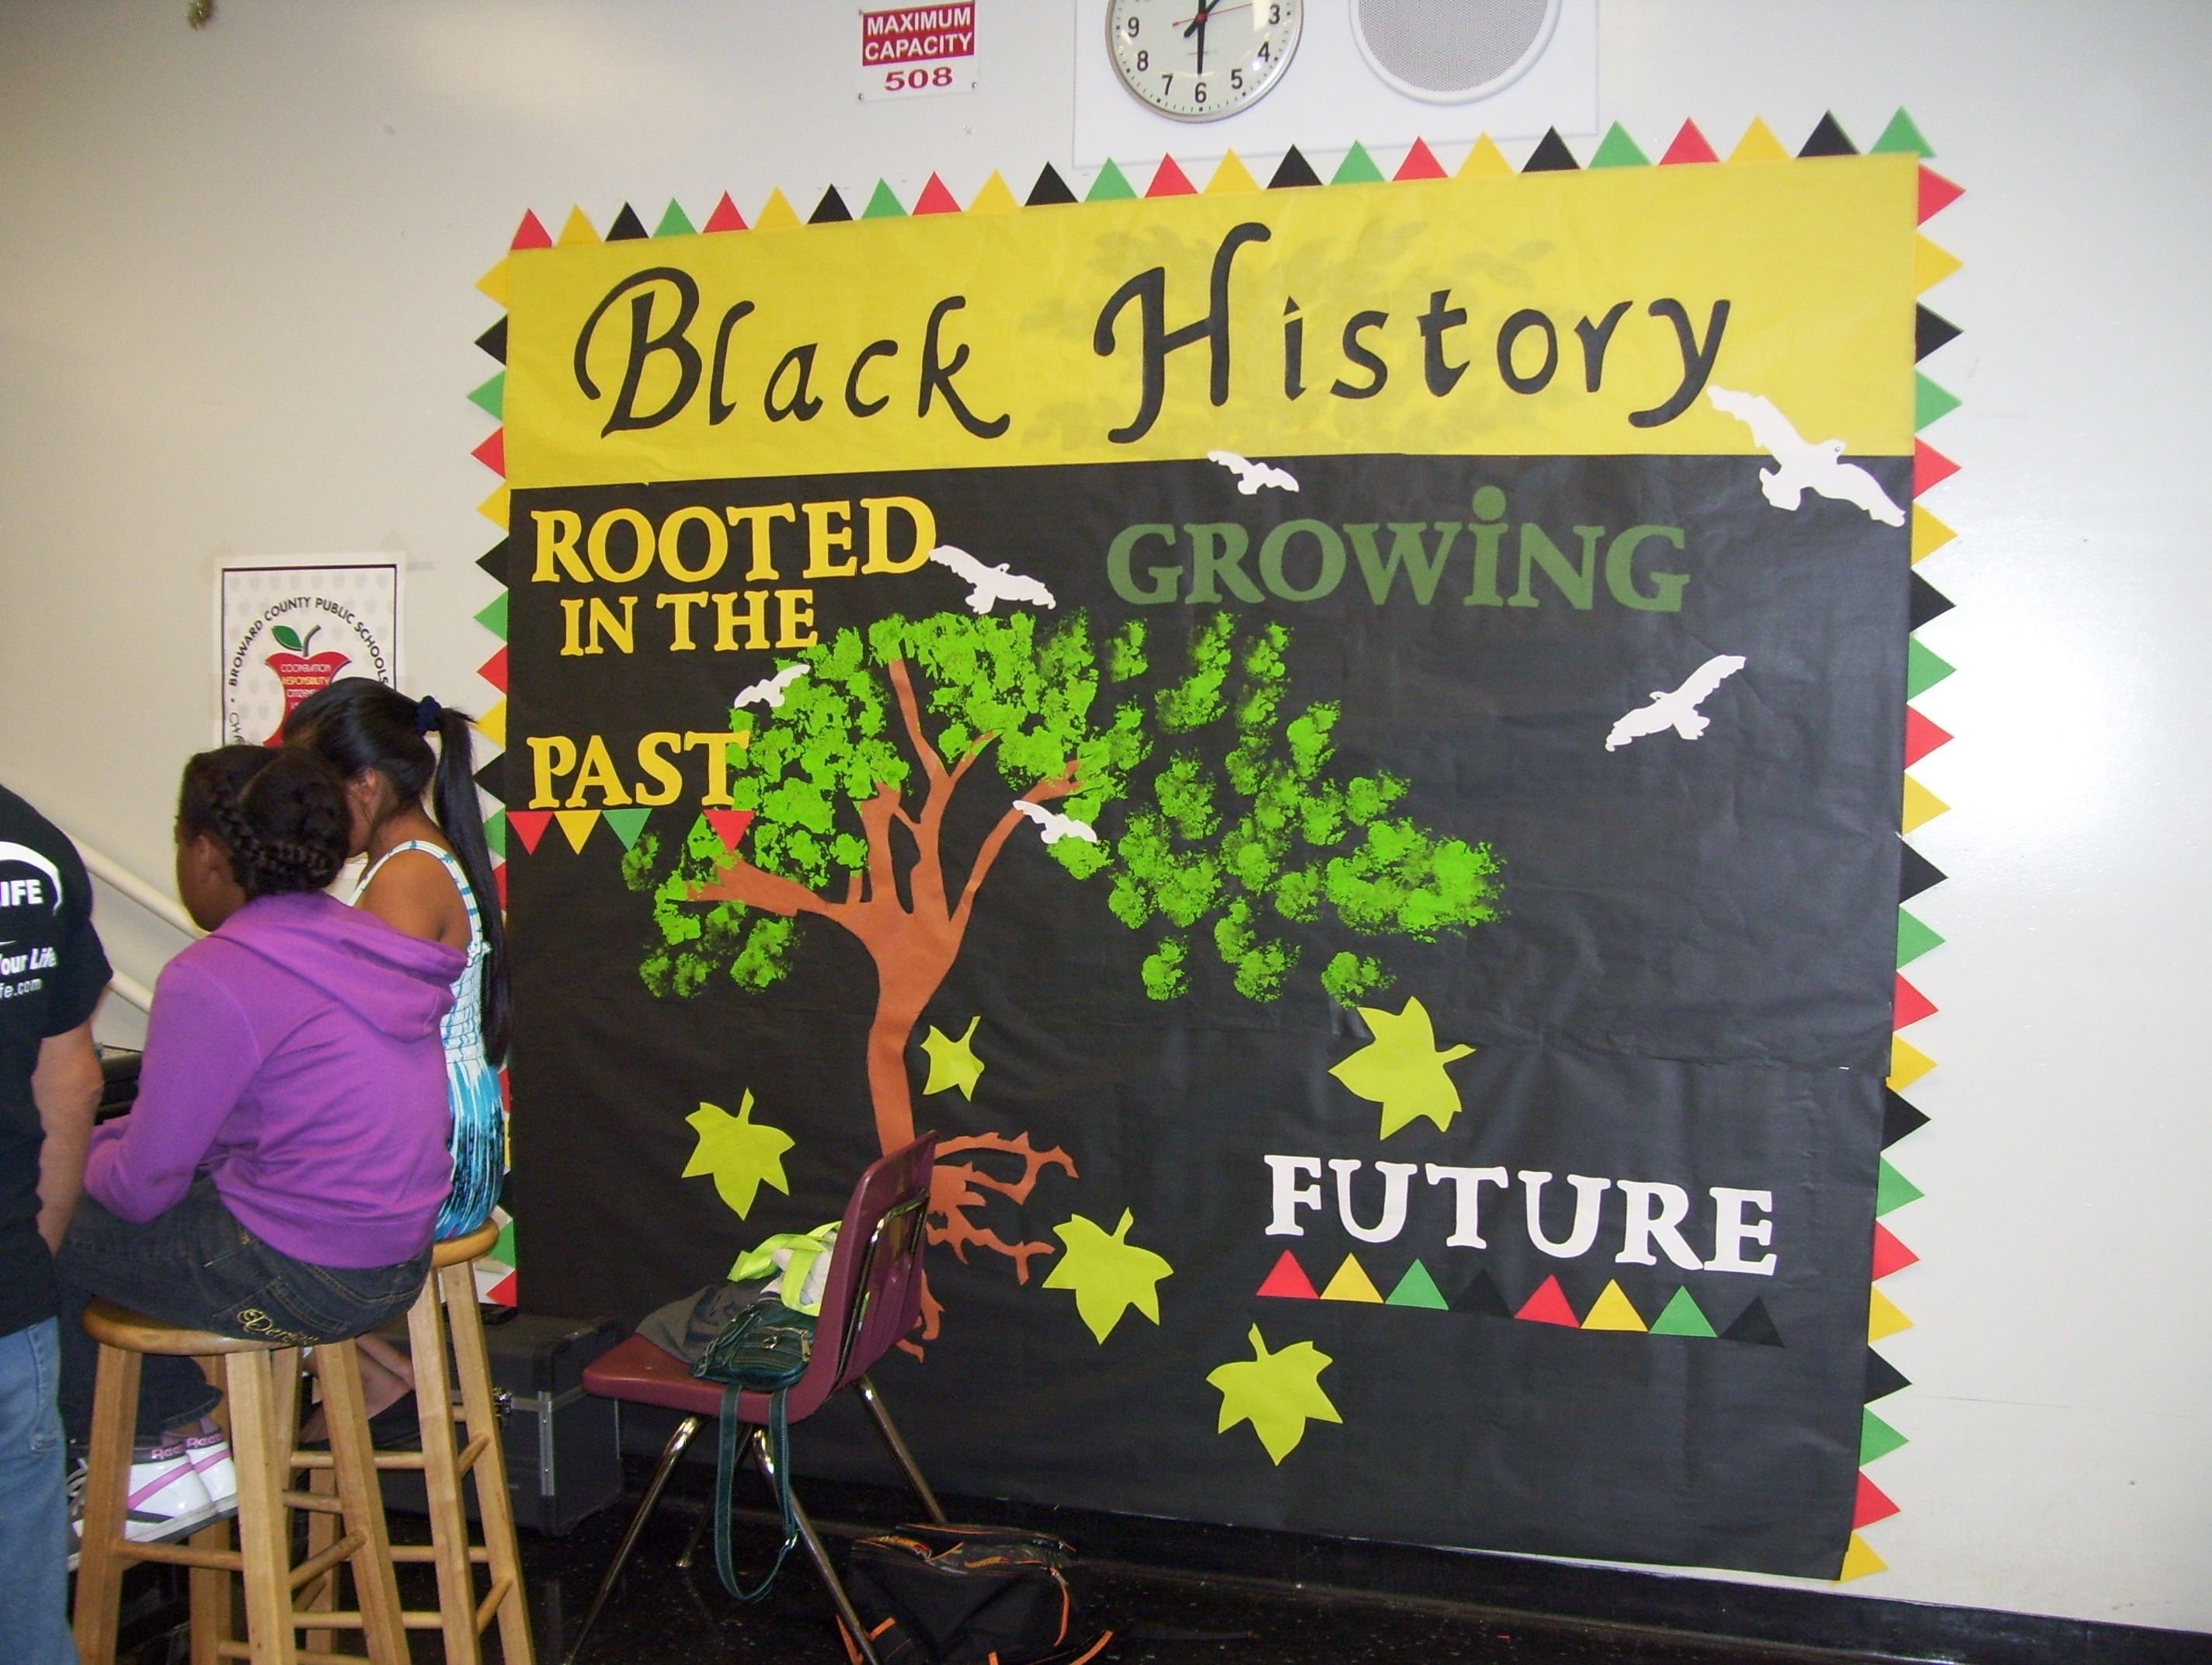 10 Most Popular Black History Ideas For Church black history month ideas education pinterest black history 2022